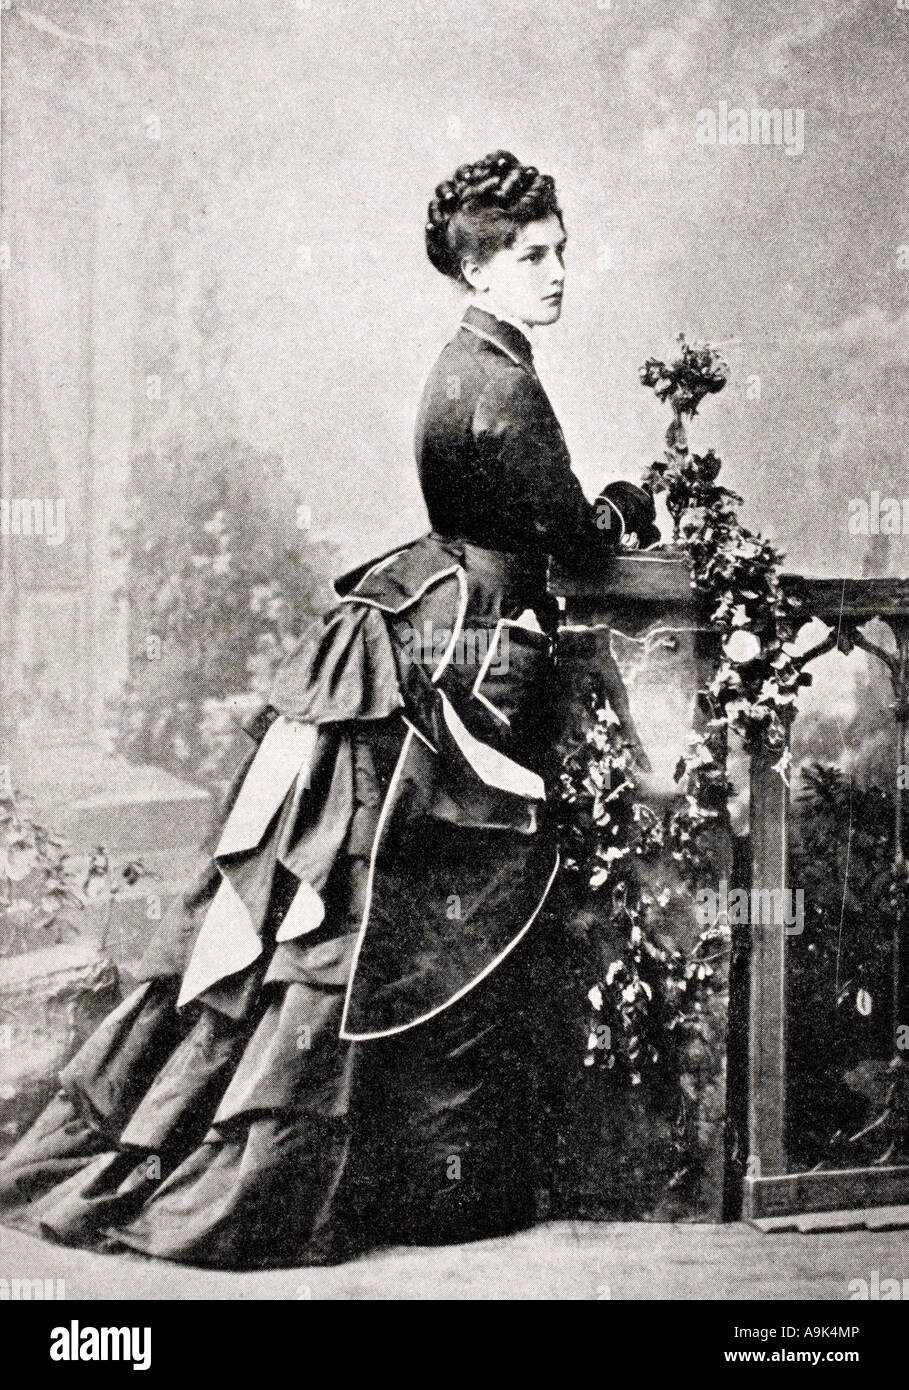 Jennie Spencer-Churchill, nee Jerome, als Lady Randolph Churchill, 1854 - 1921 bekannt. American-born Britische socialite, der Mutter von Winston Churchill. Stockfoto